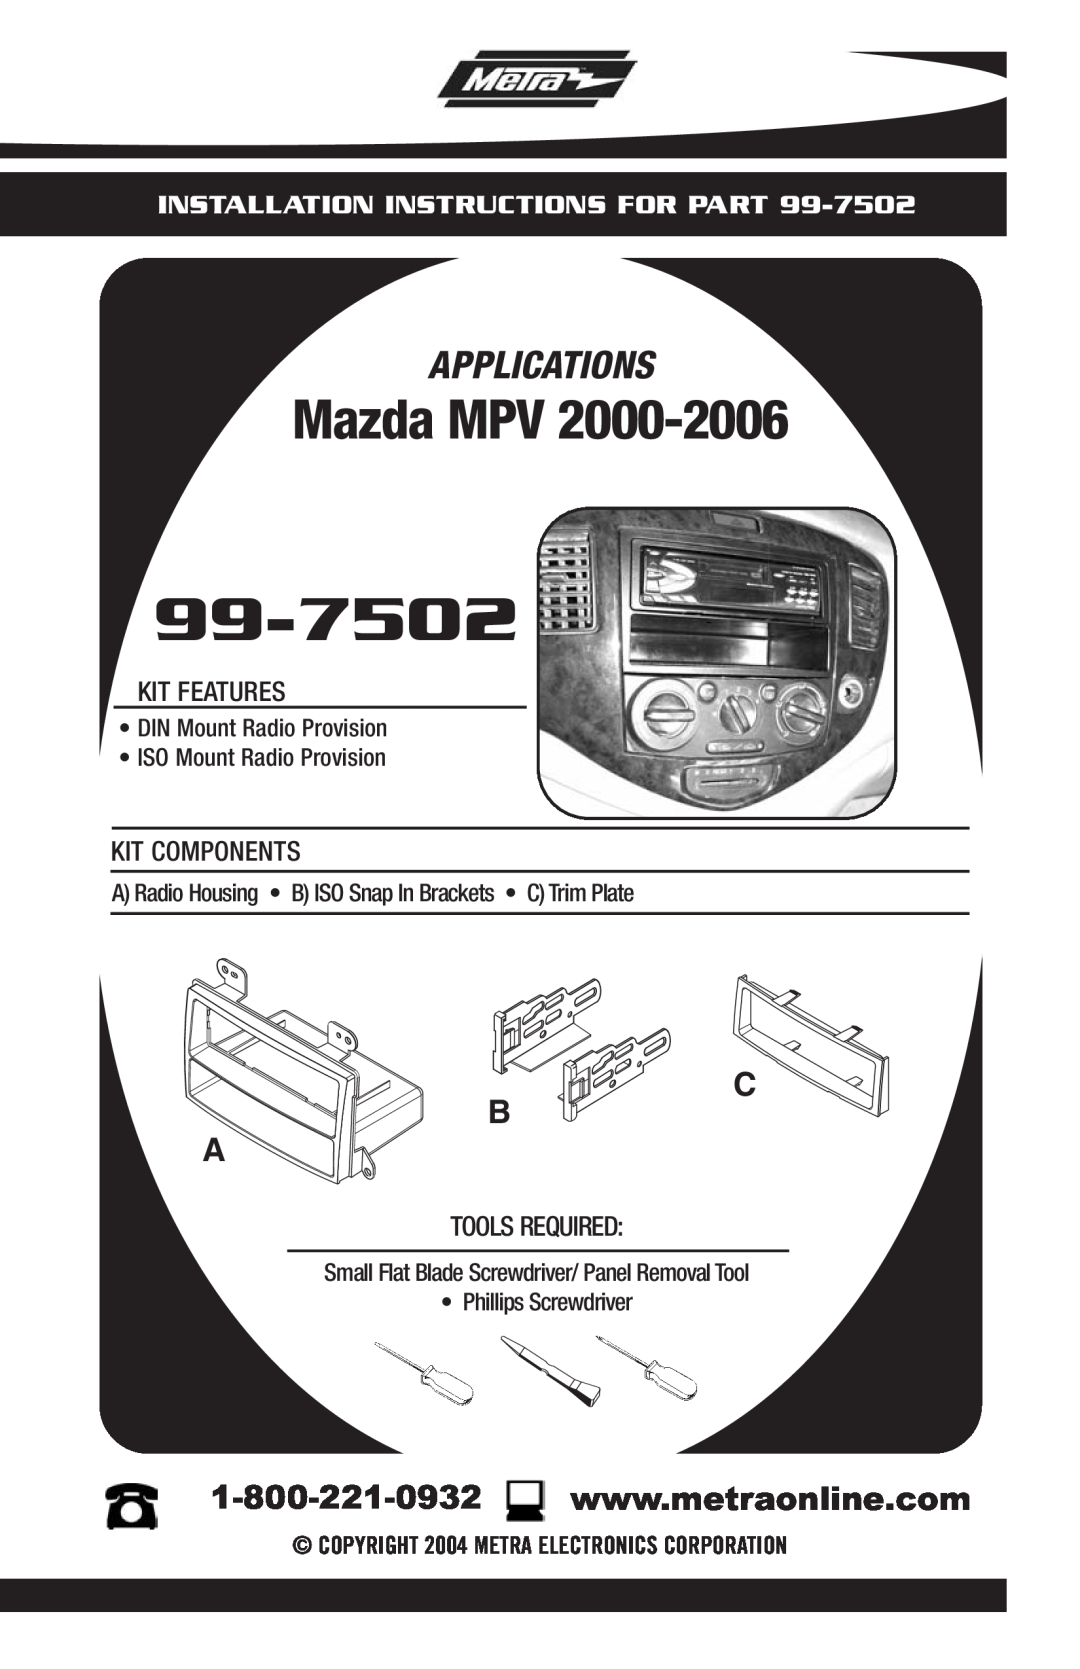 Metra Electronics 99-7502 installation instructions Mazda MPV, Applications, Installation Instructions For Part 